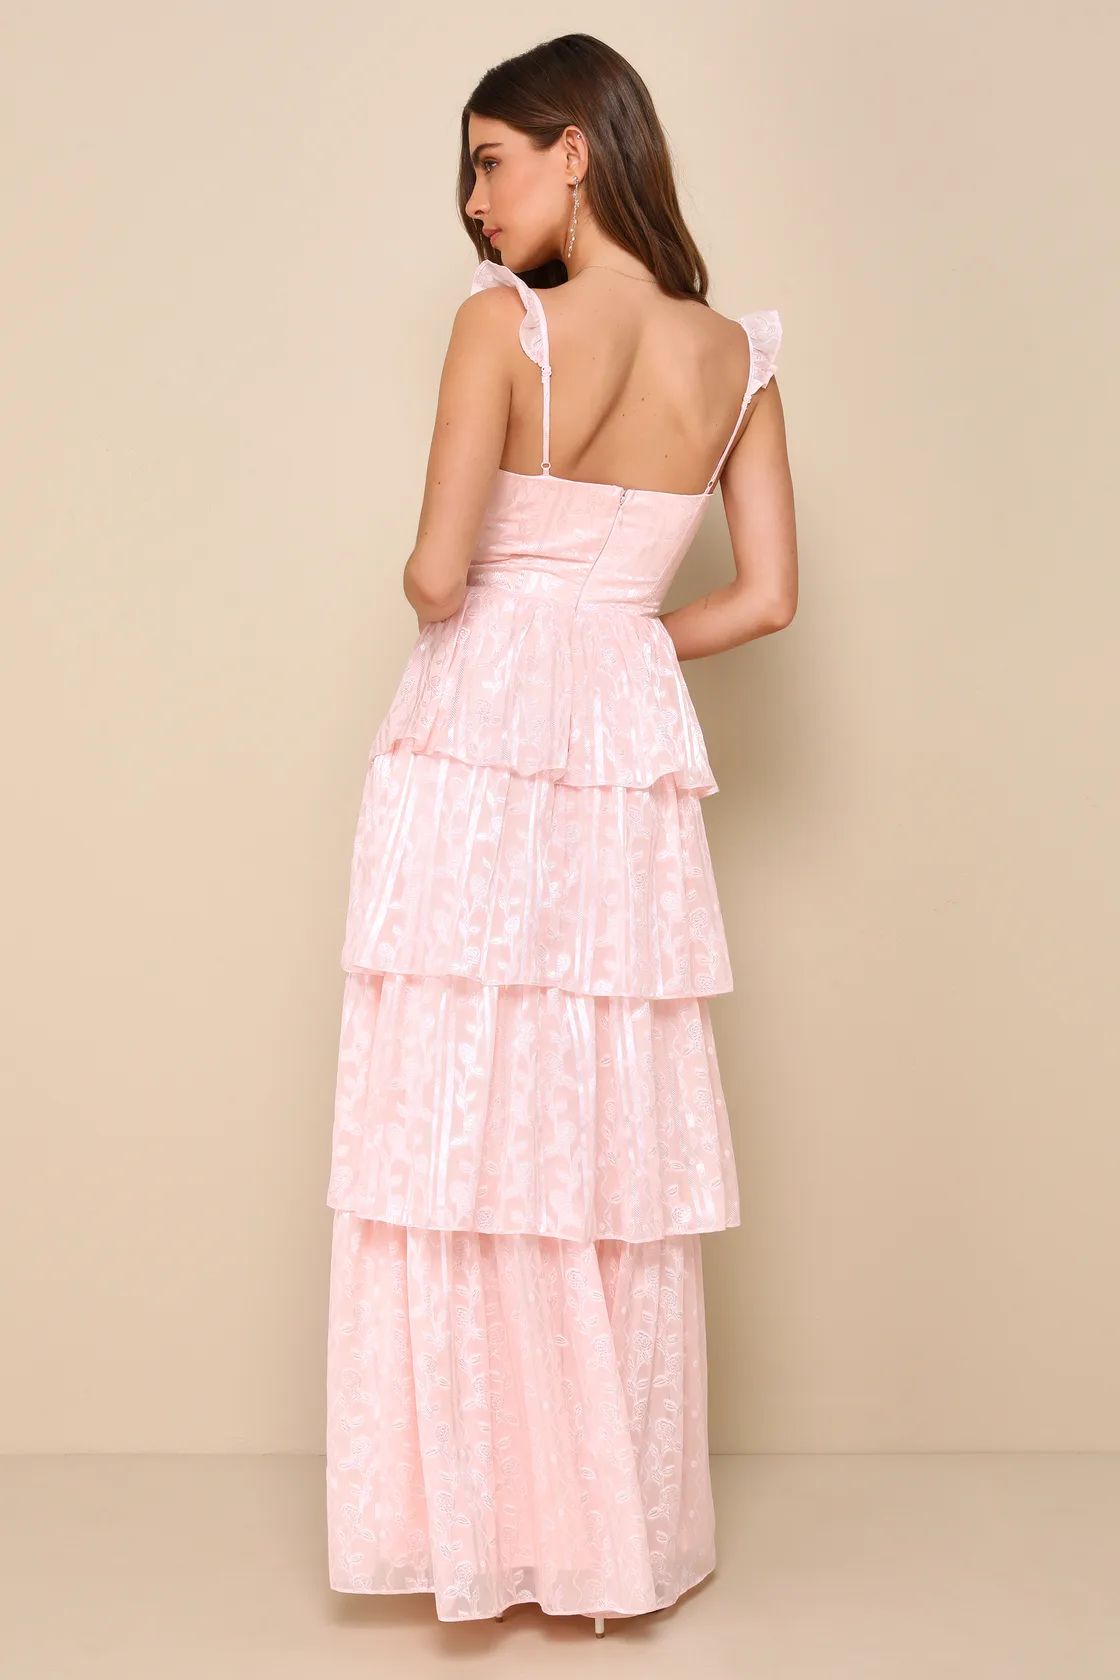 Stunning Glory Light Pink Floral Jacquard Tiered Maxi Dress | Lulus